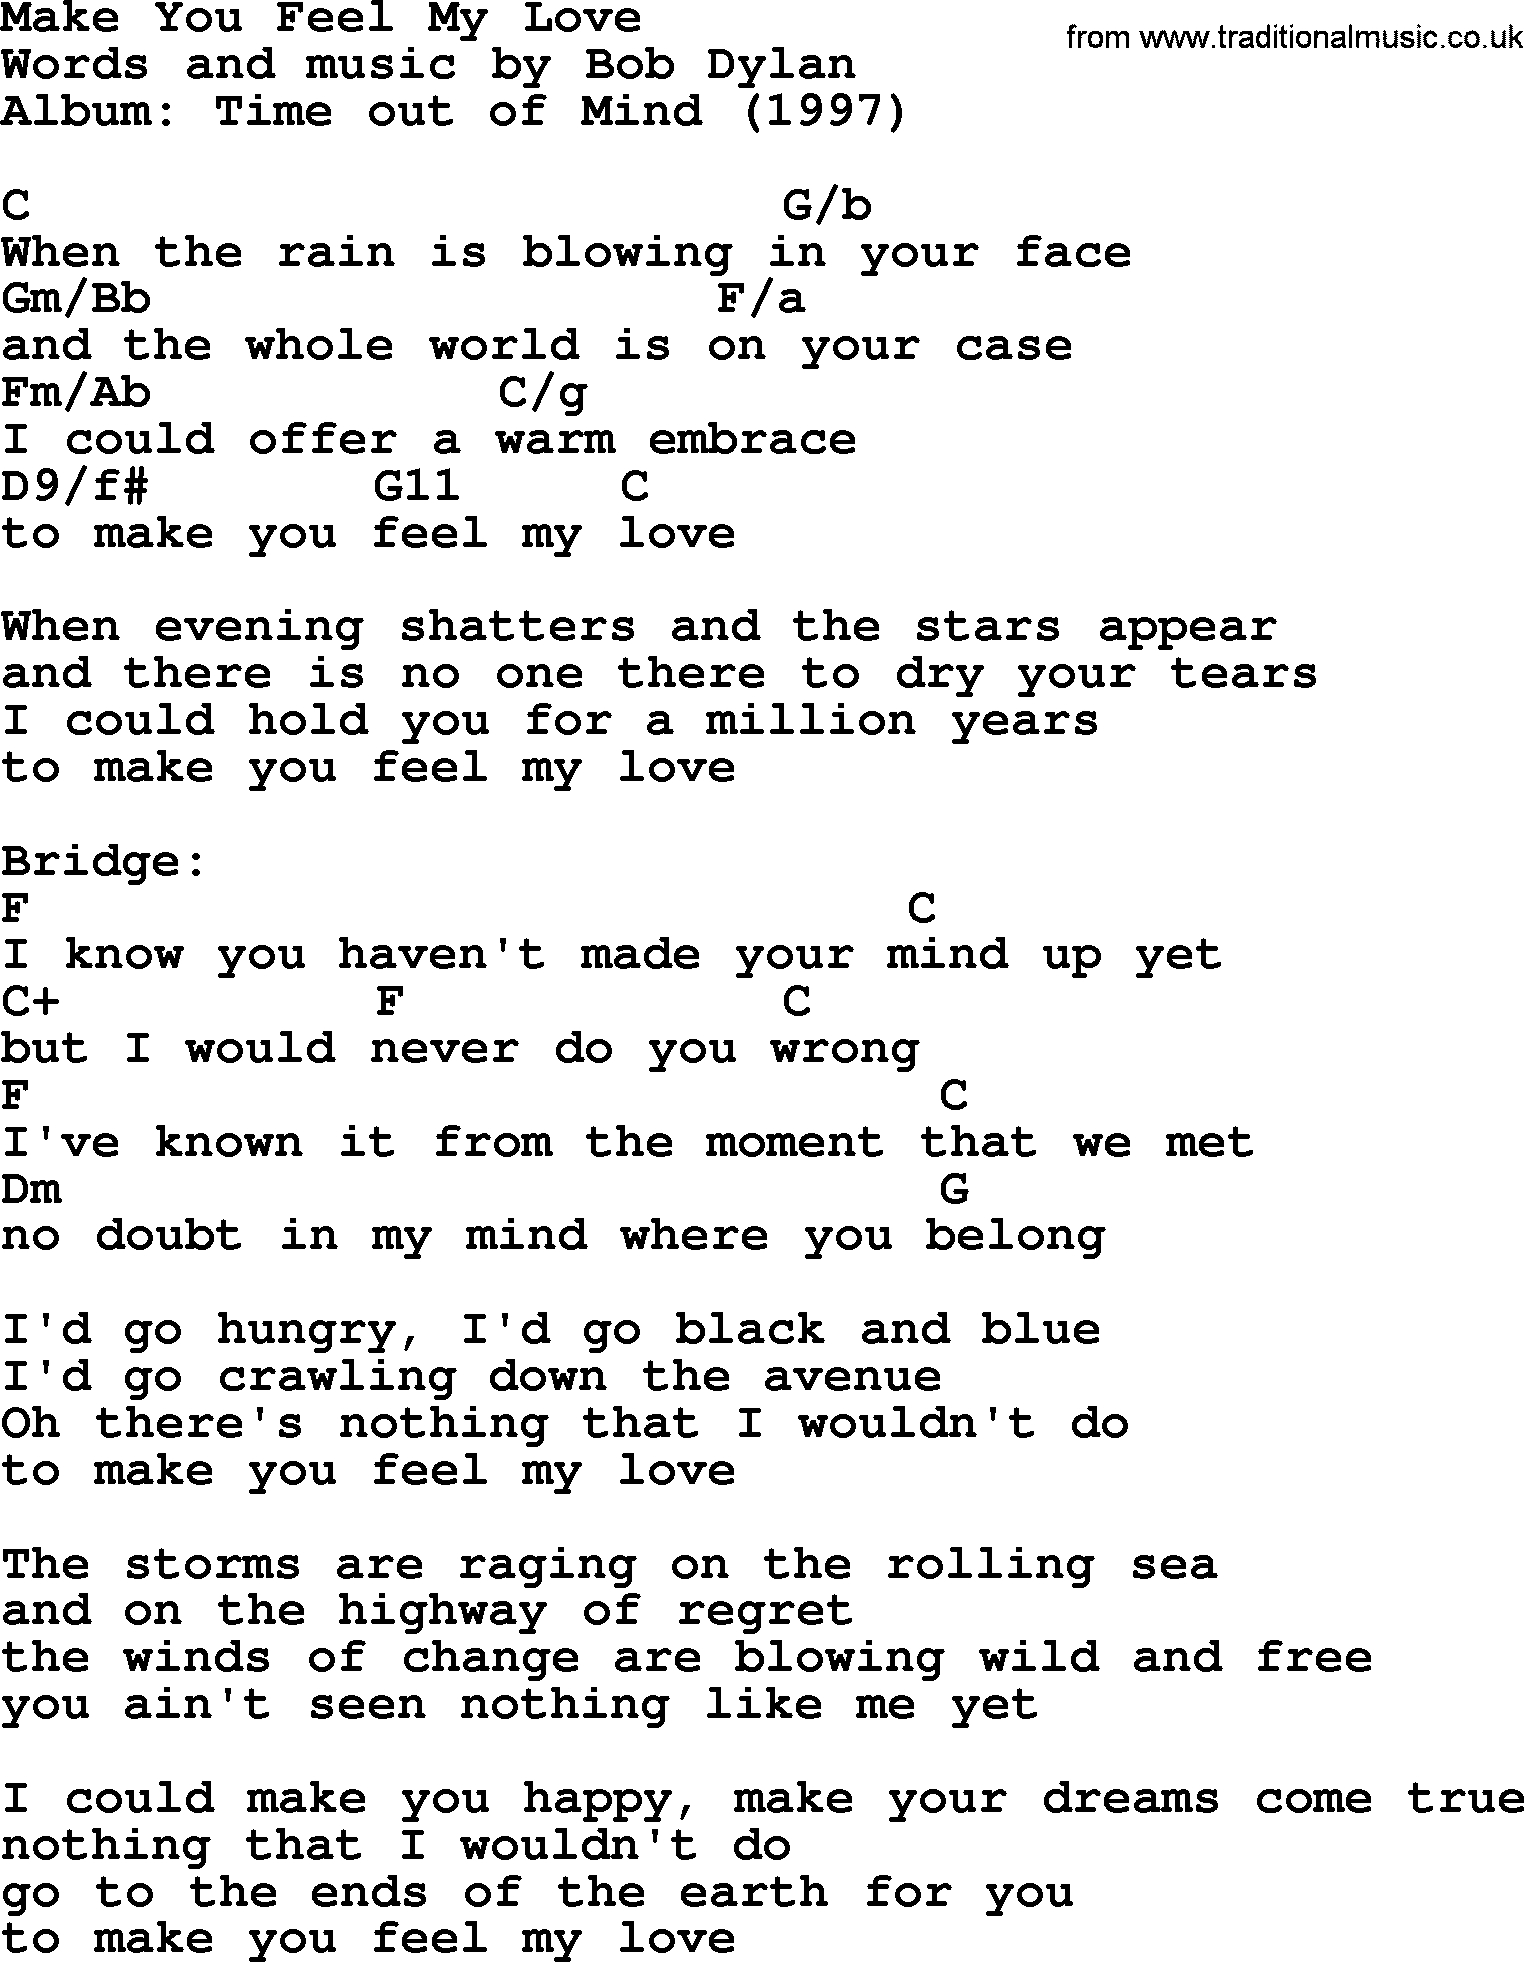 Sea Of Love Chords Bob Dylan Song Make You Feel My Love Lyrics And Chords